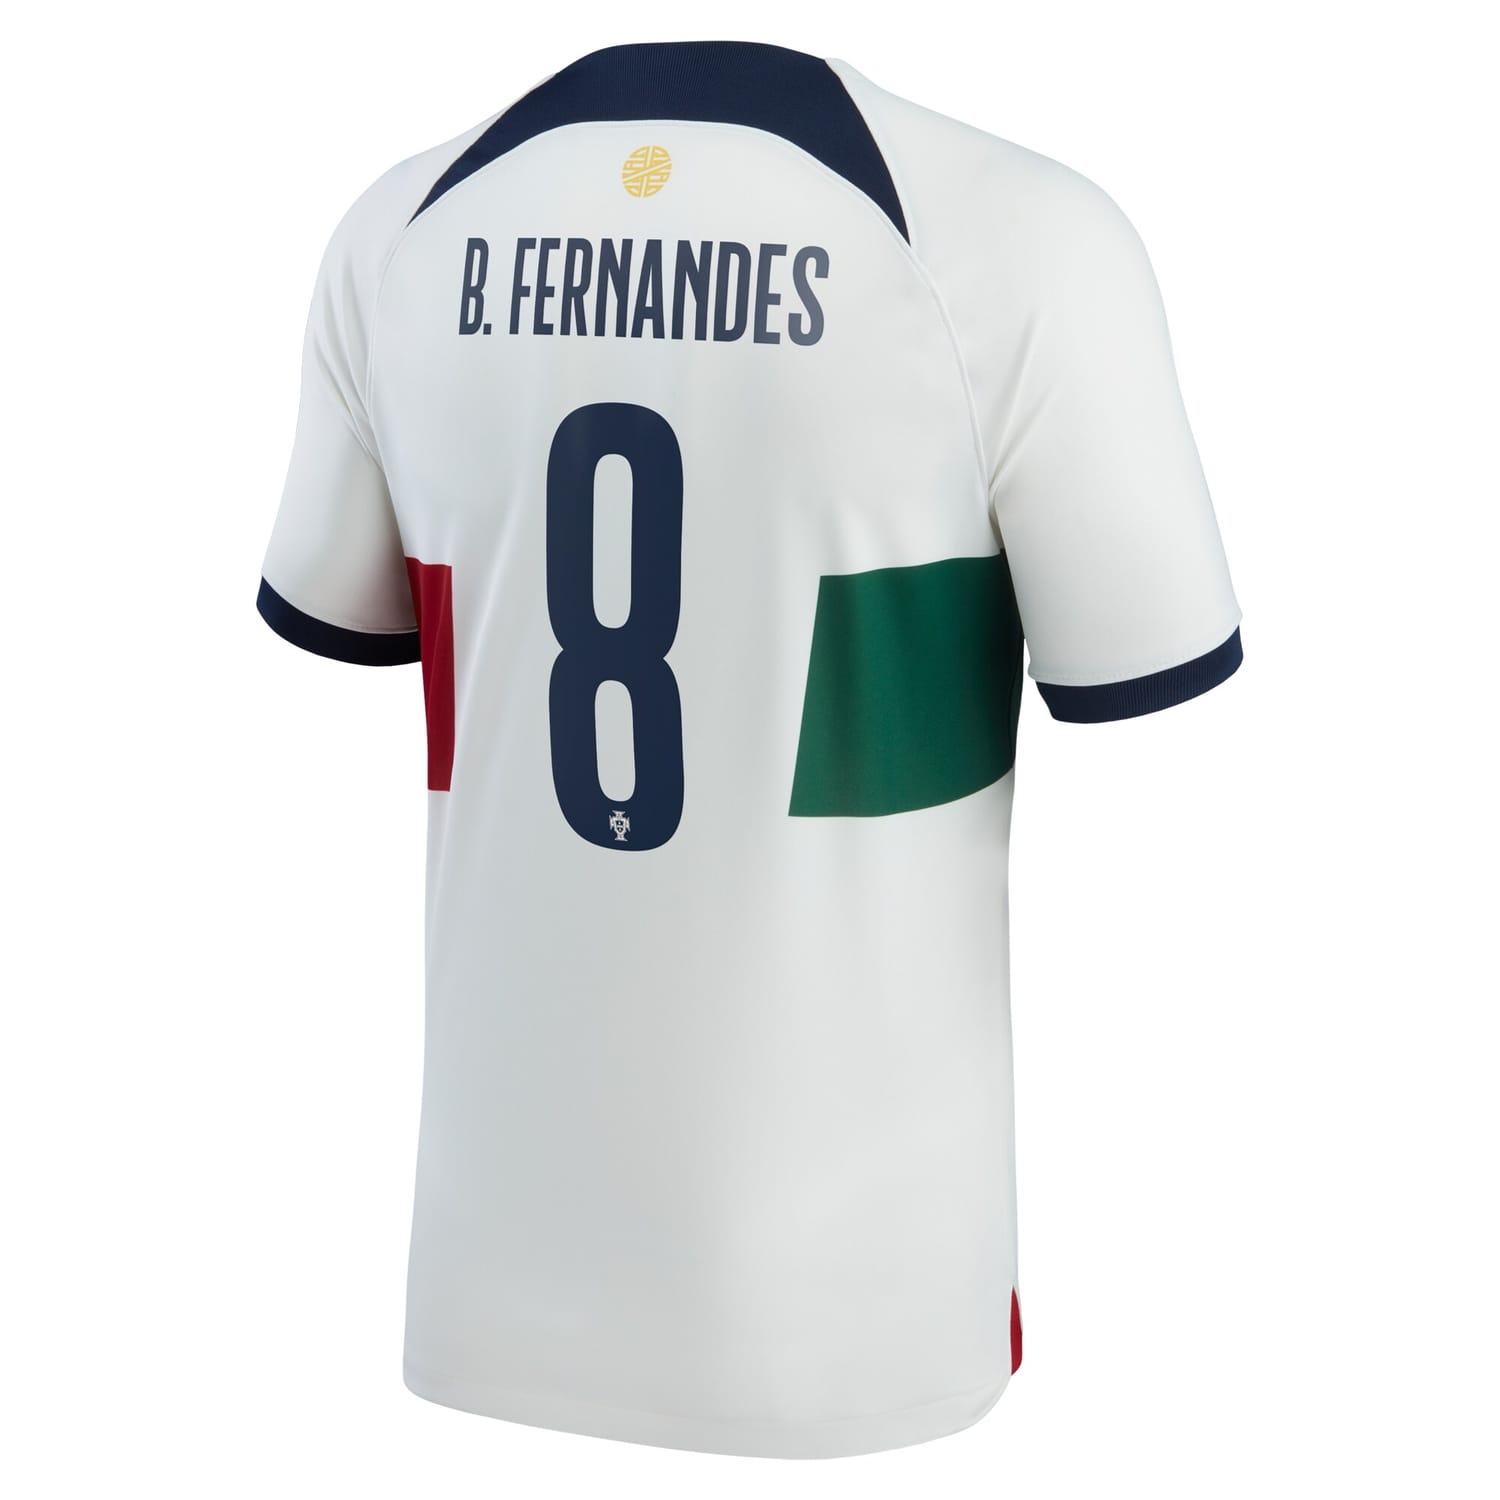 Portugal National Team Away Jersey Shirt White 2022-23 player Bruno Fernandes printing for Men